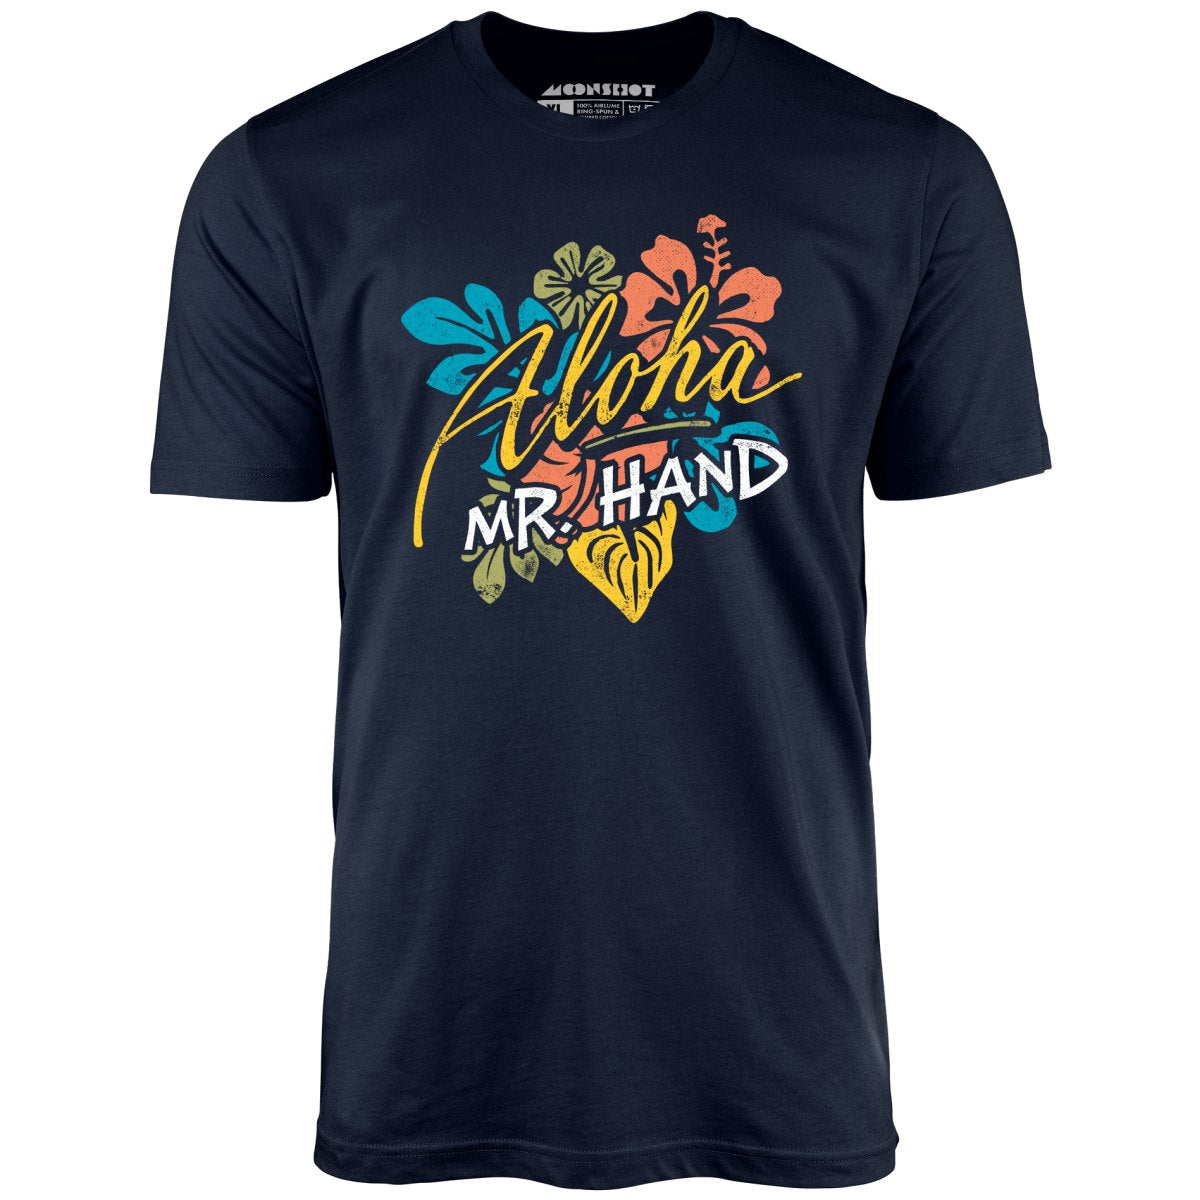 Aloha Mr. Hand - Unisex T-Shirt